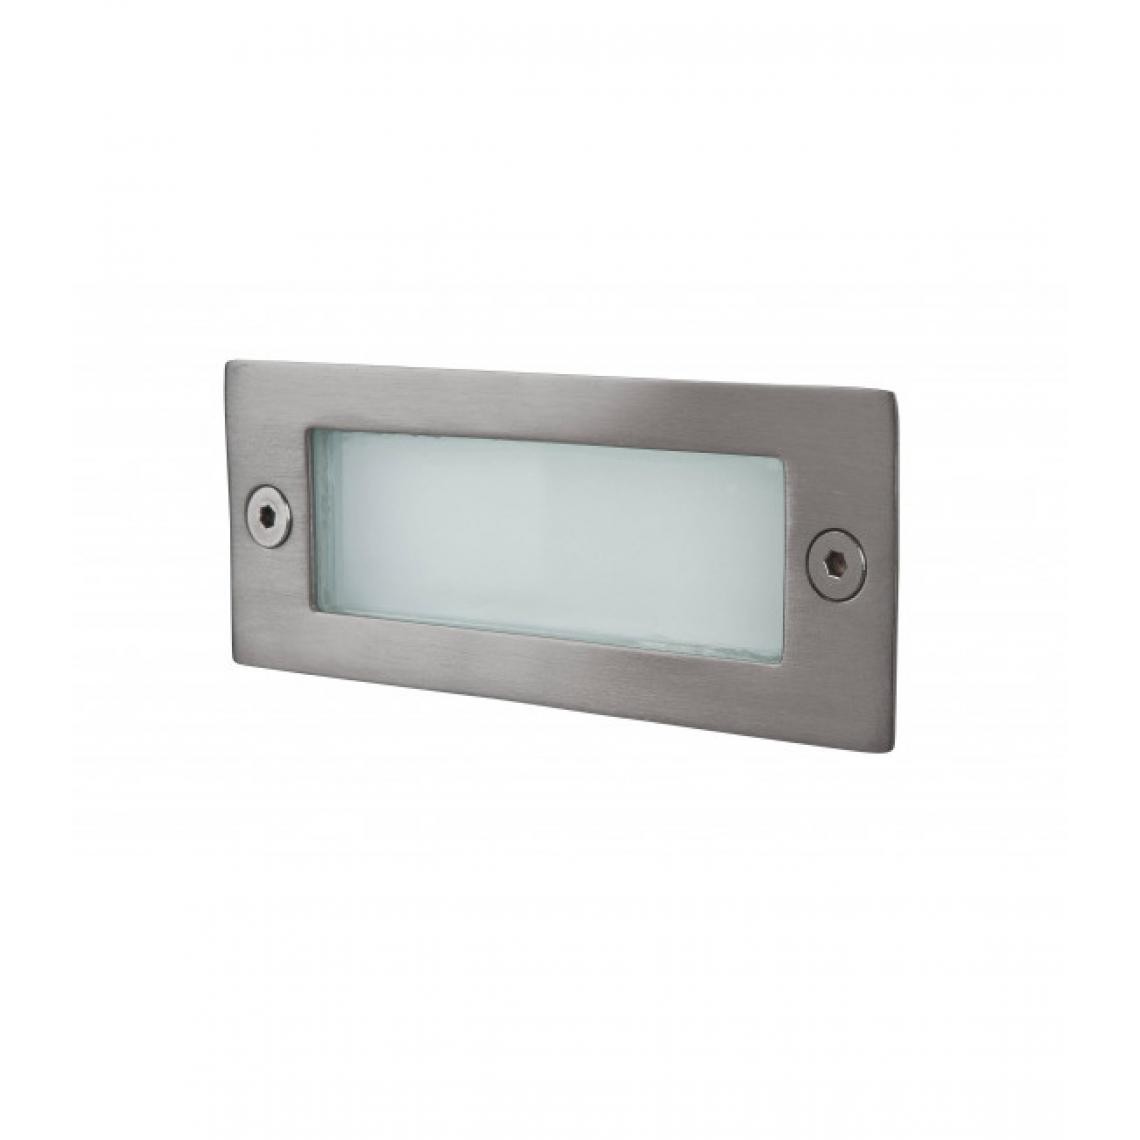 Firstlight - Applique LED Wall, rectangulaire, acier inoxydable - Applique, hublot